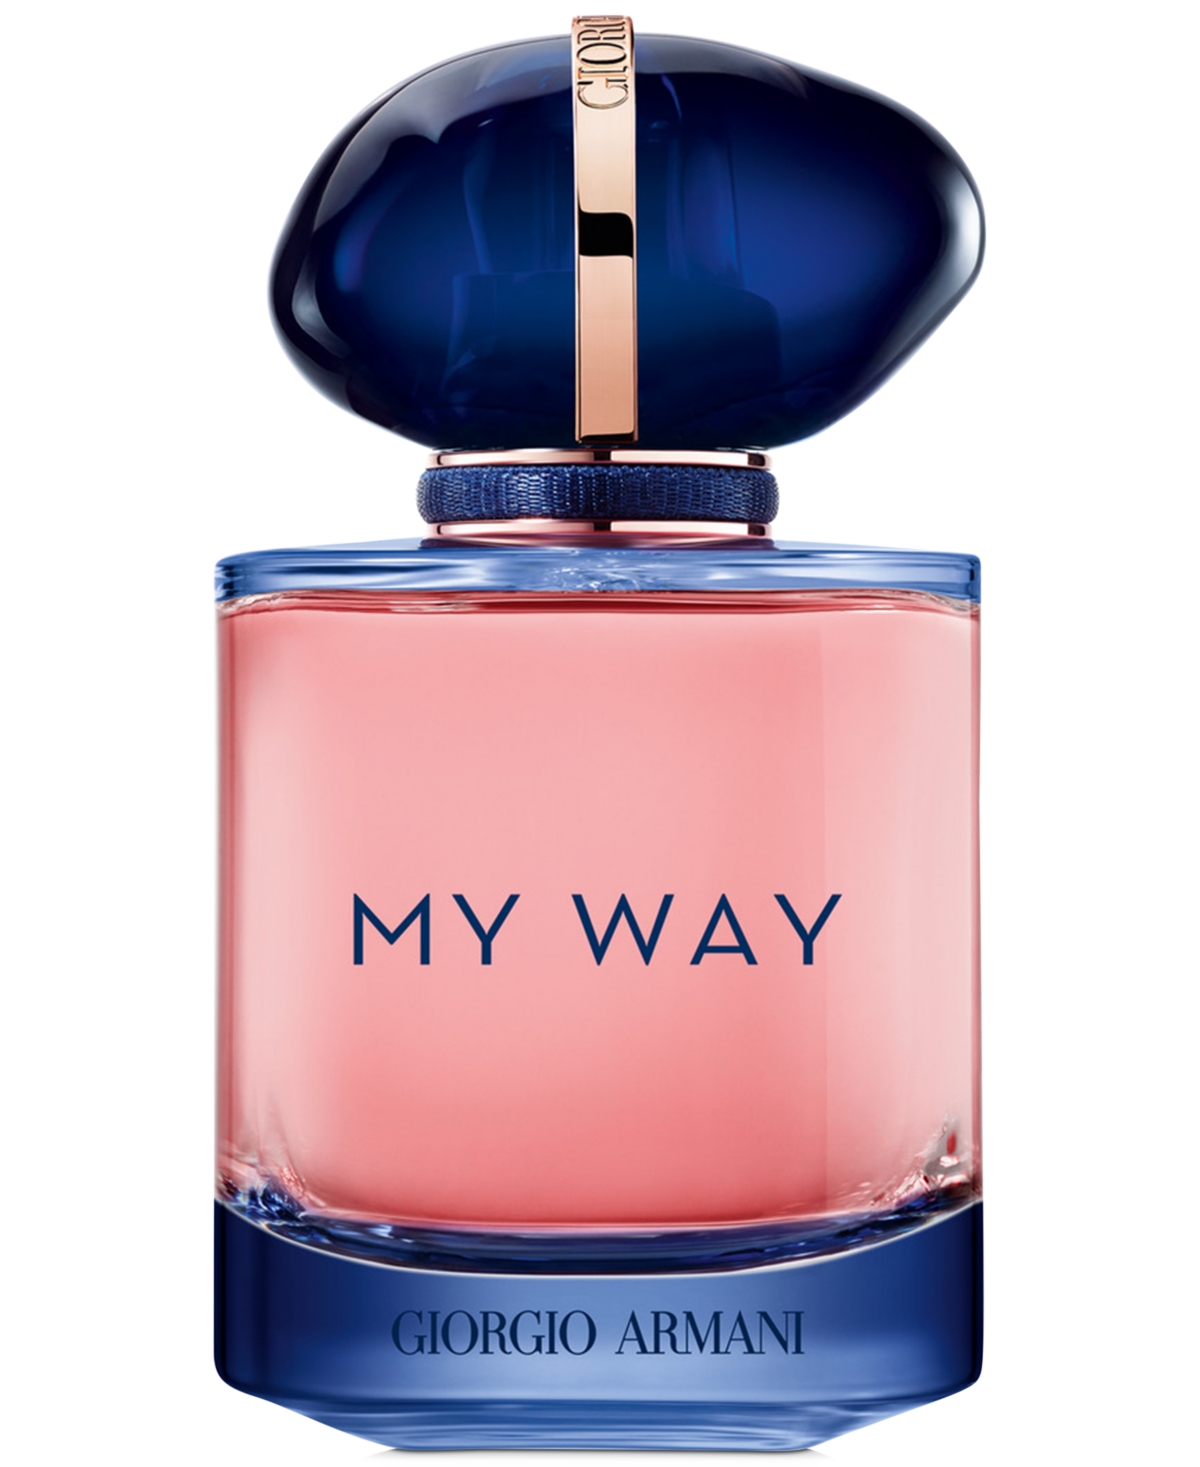 Armani Beauty My Way Intense Eau de Parfum, 1.7-oz.